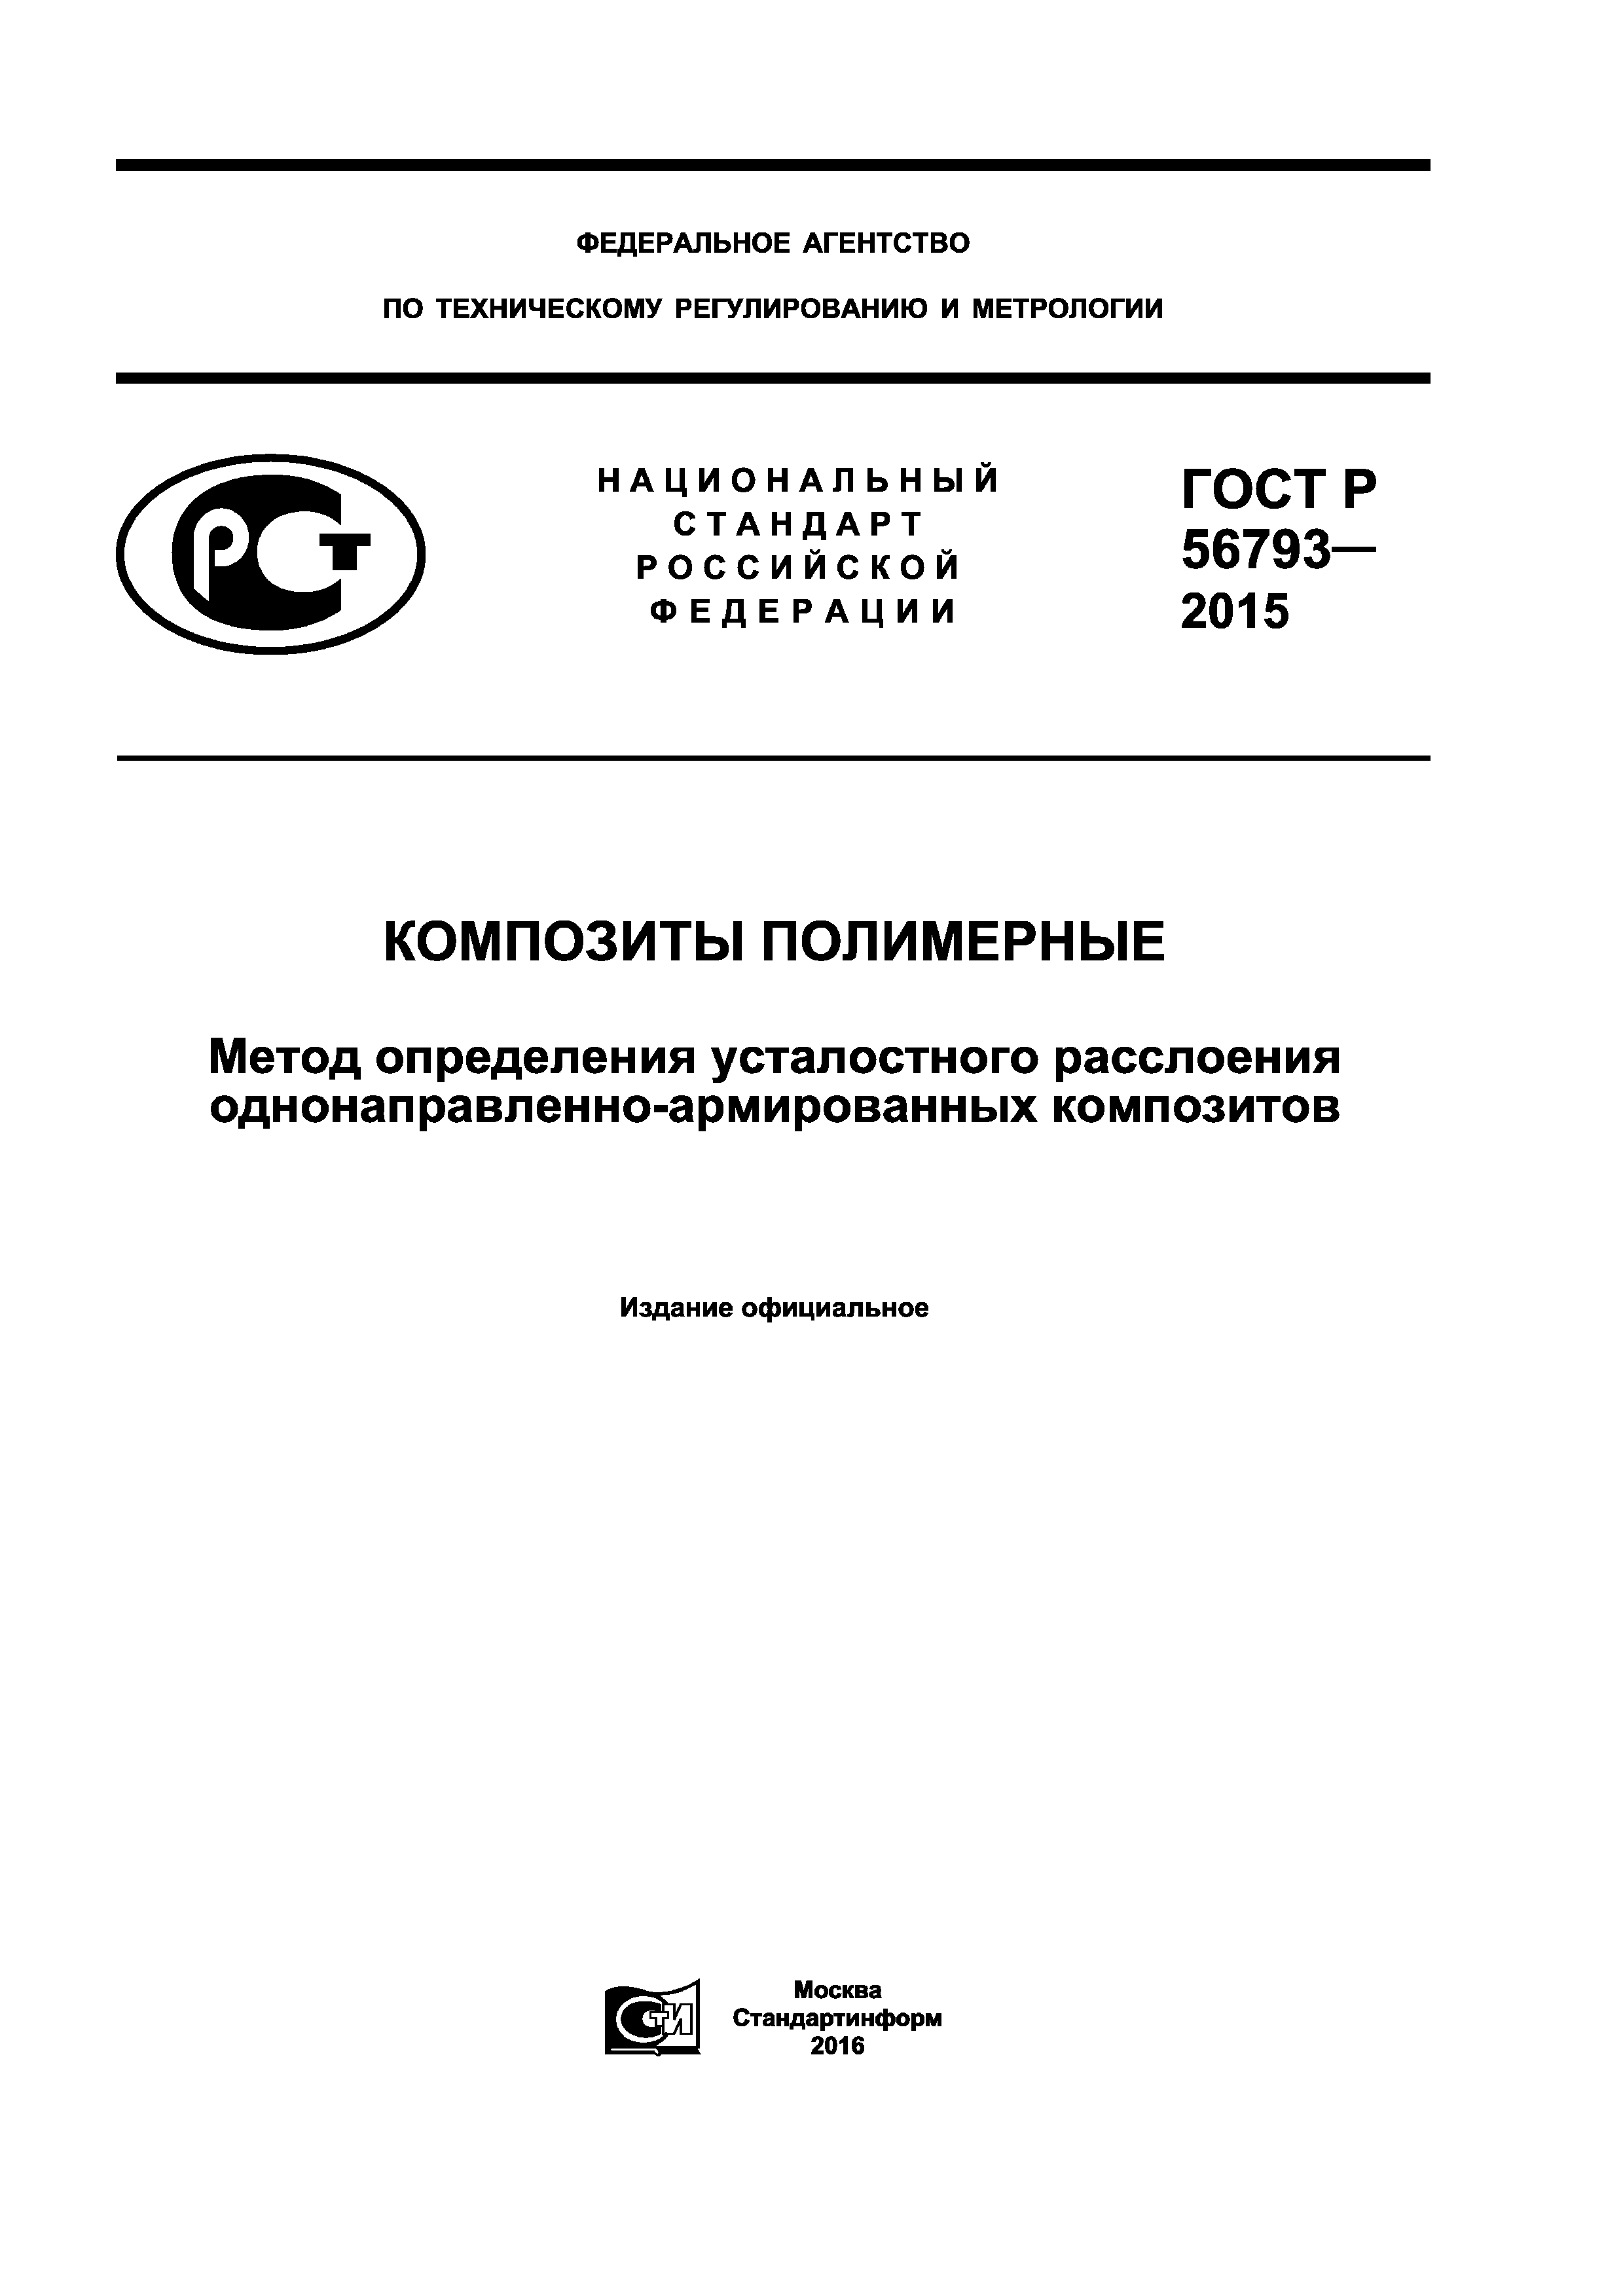 ГОСТ Р 56793-2015